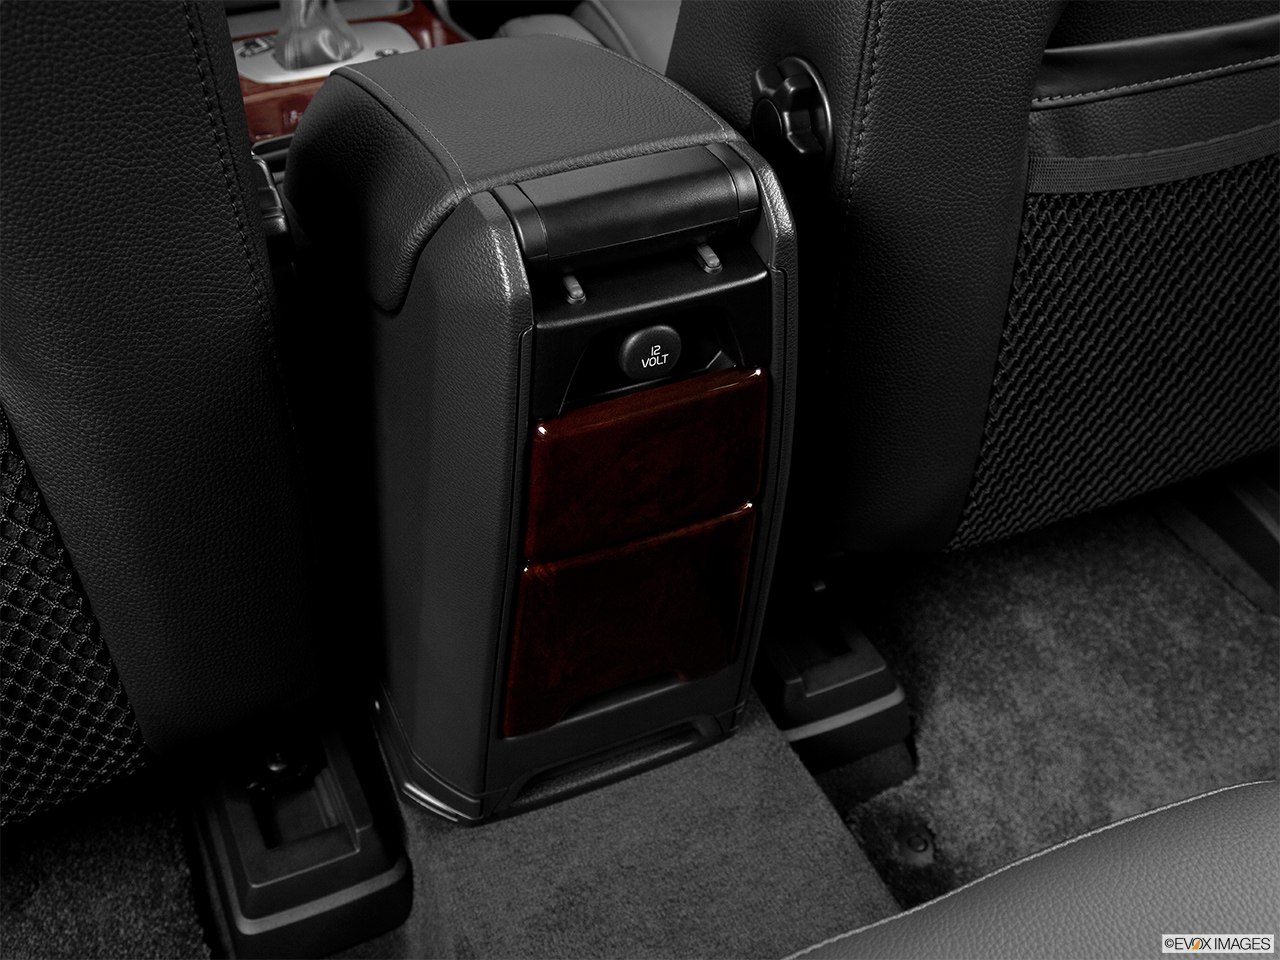 2014 Volvo XC90 3.2 FWD Premier Plus Rear A/C controls. 